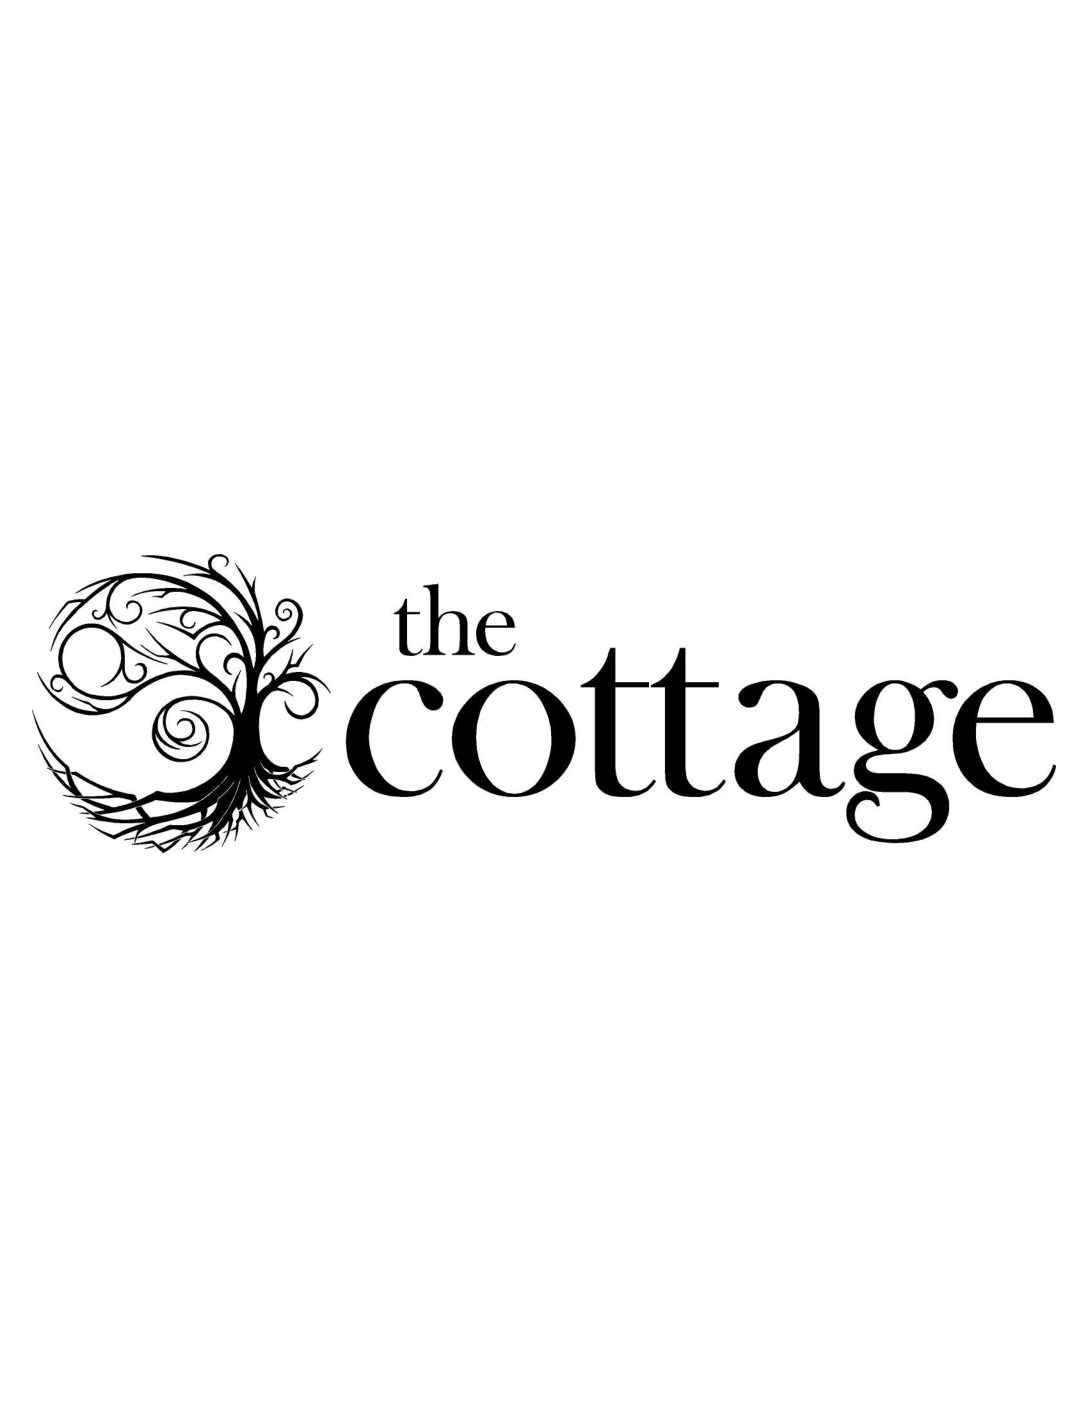 The Cottage Clothing Company Ltd.